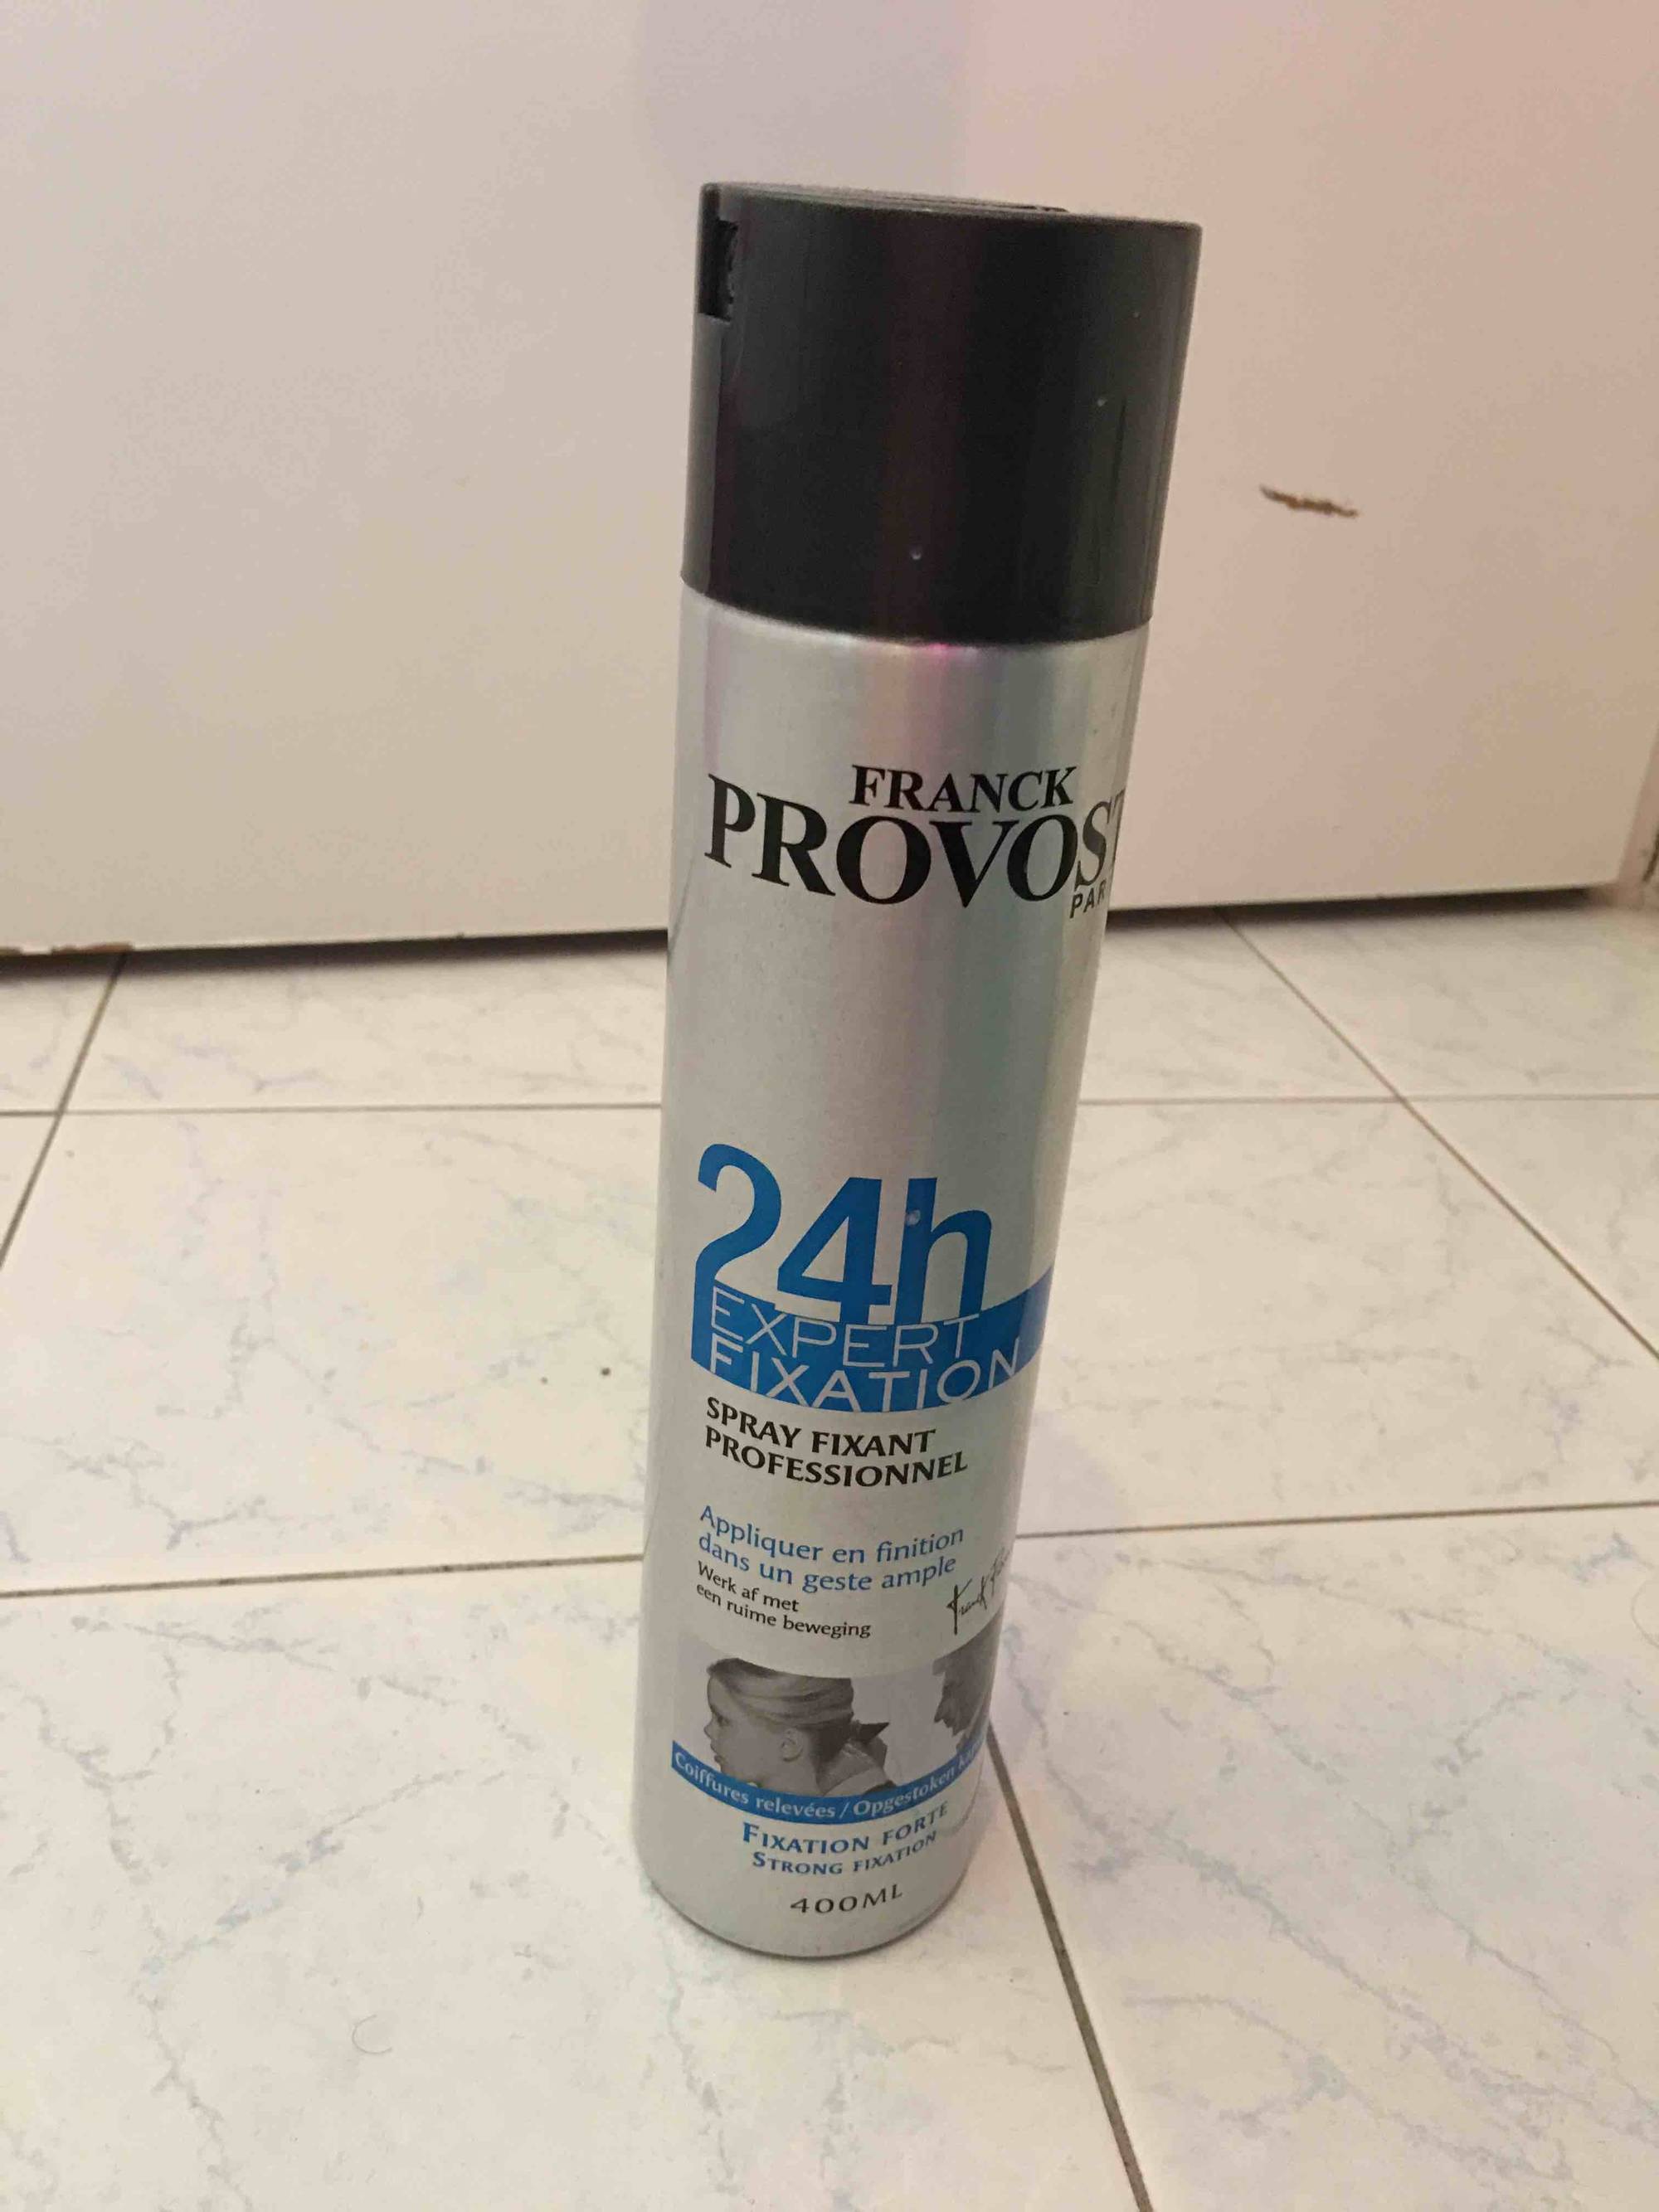 FRANCK PROVOST - Spray fixant professionnel - Expert fixation 24h